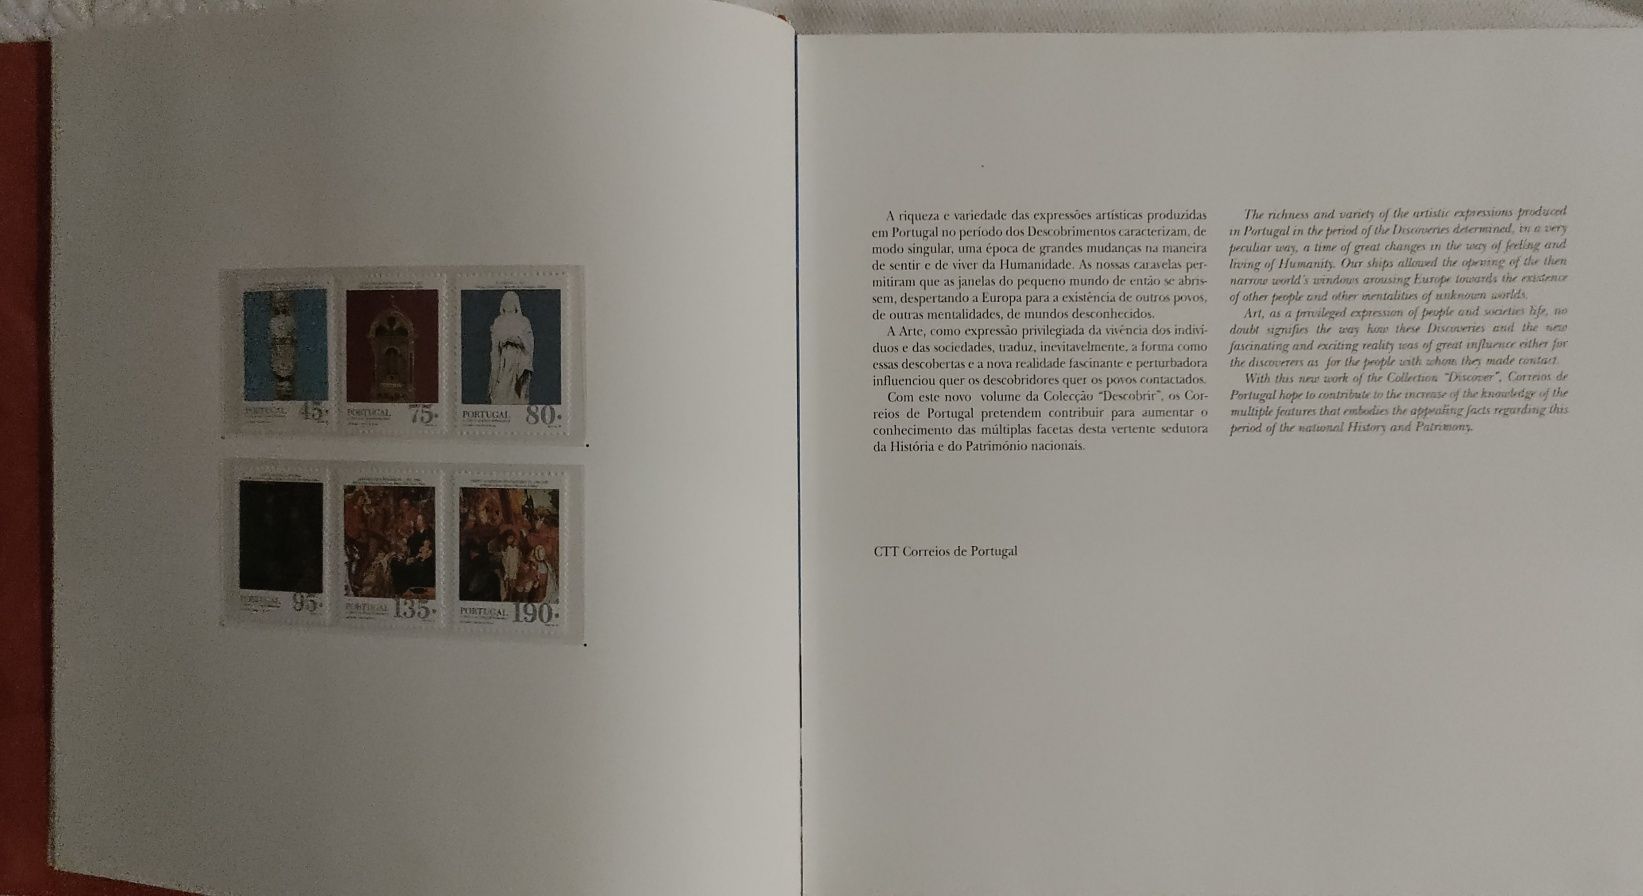 Selos - livro A arte portuguesa.